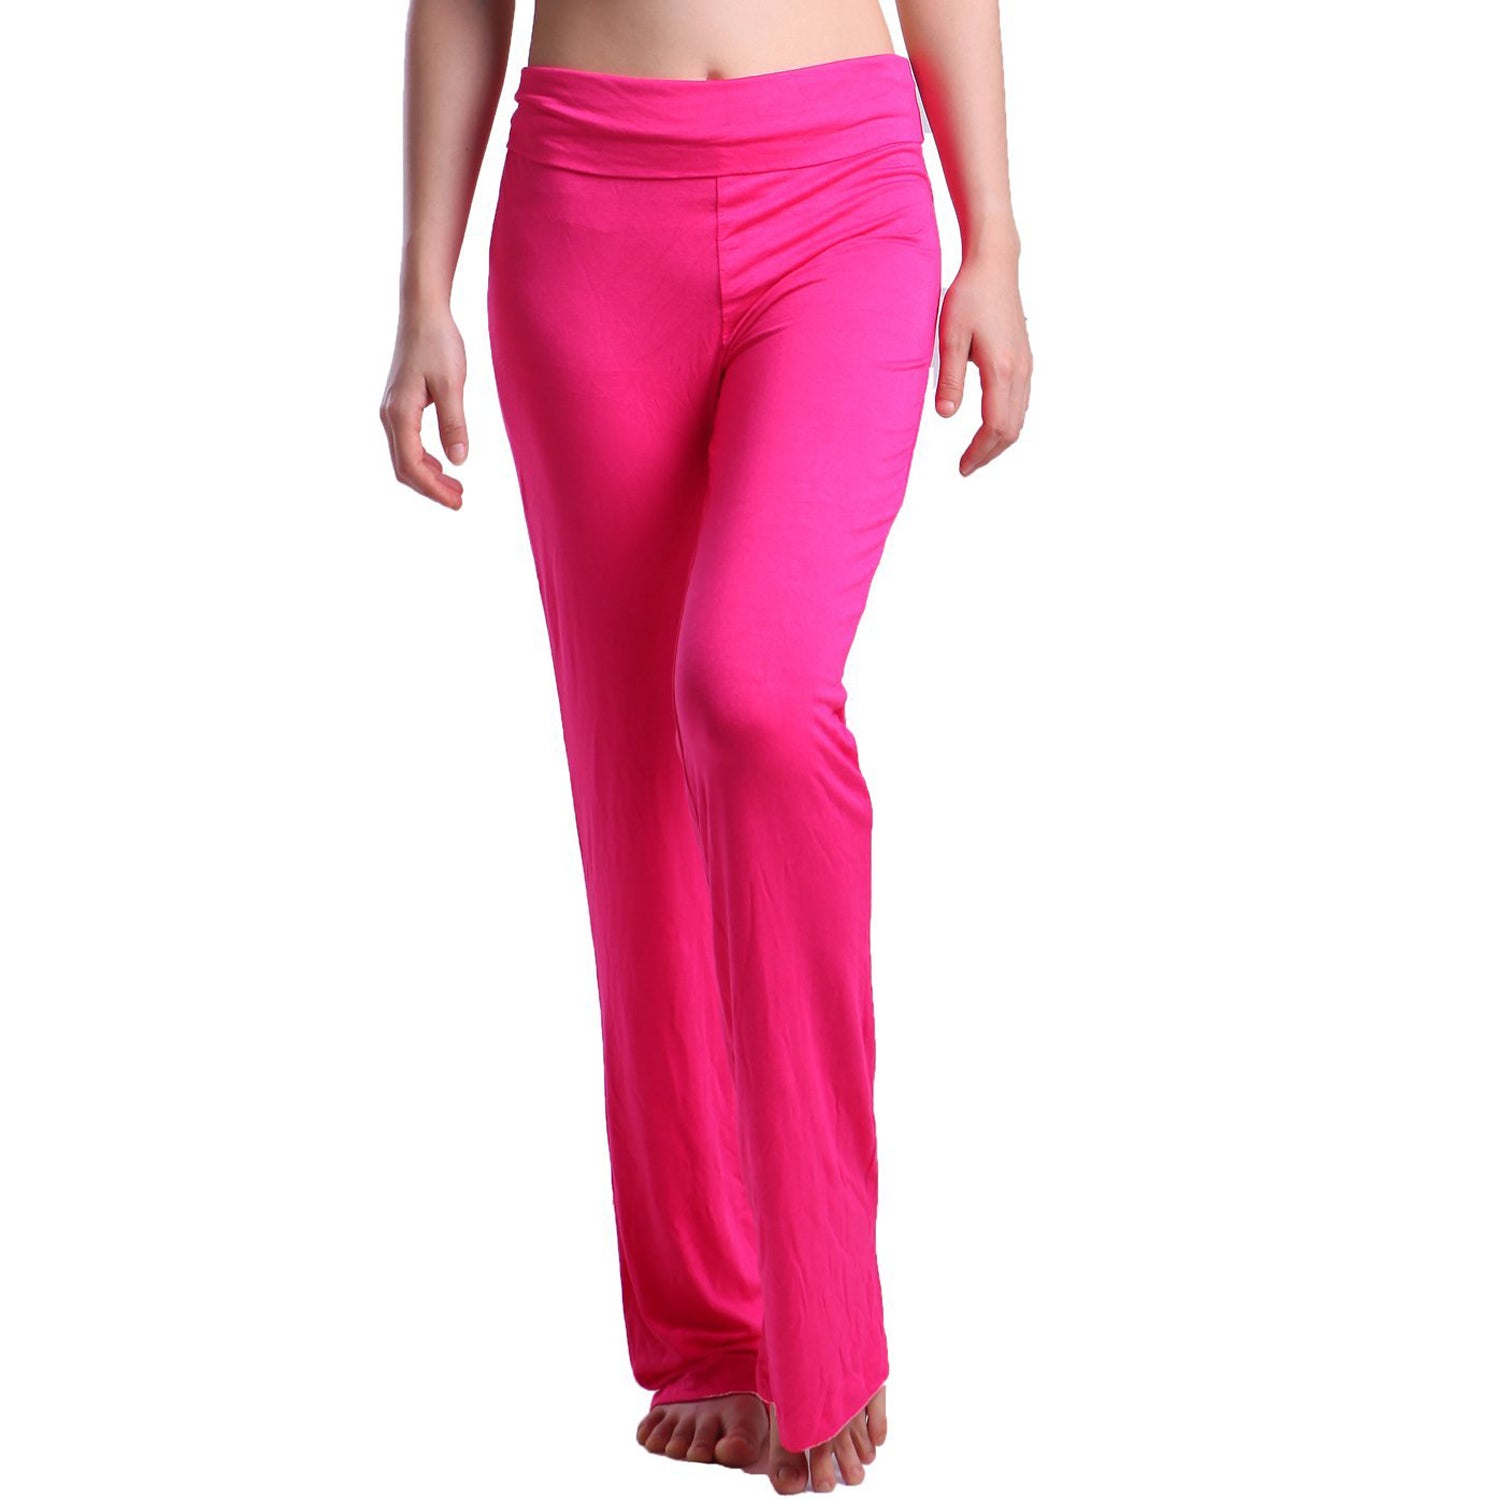 PINK PERFORMANCE COTTON FOLD OVER YOGA PANTS MEDIUM  Fold over yoga pants,  Pink performance, Yoga pants